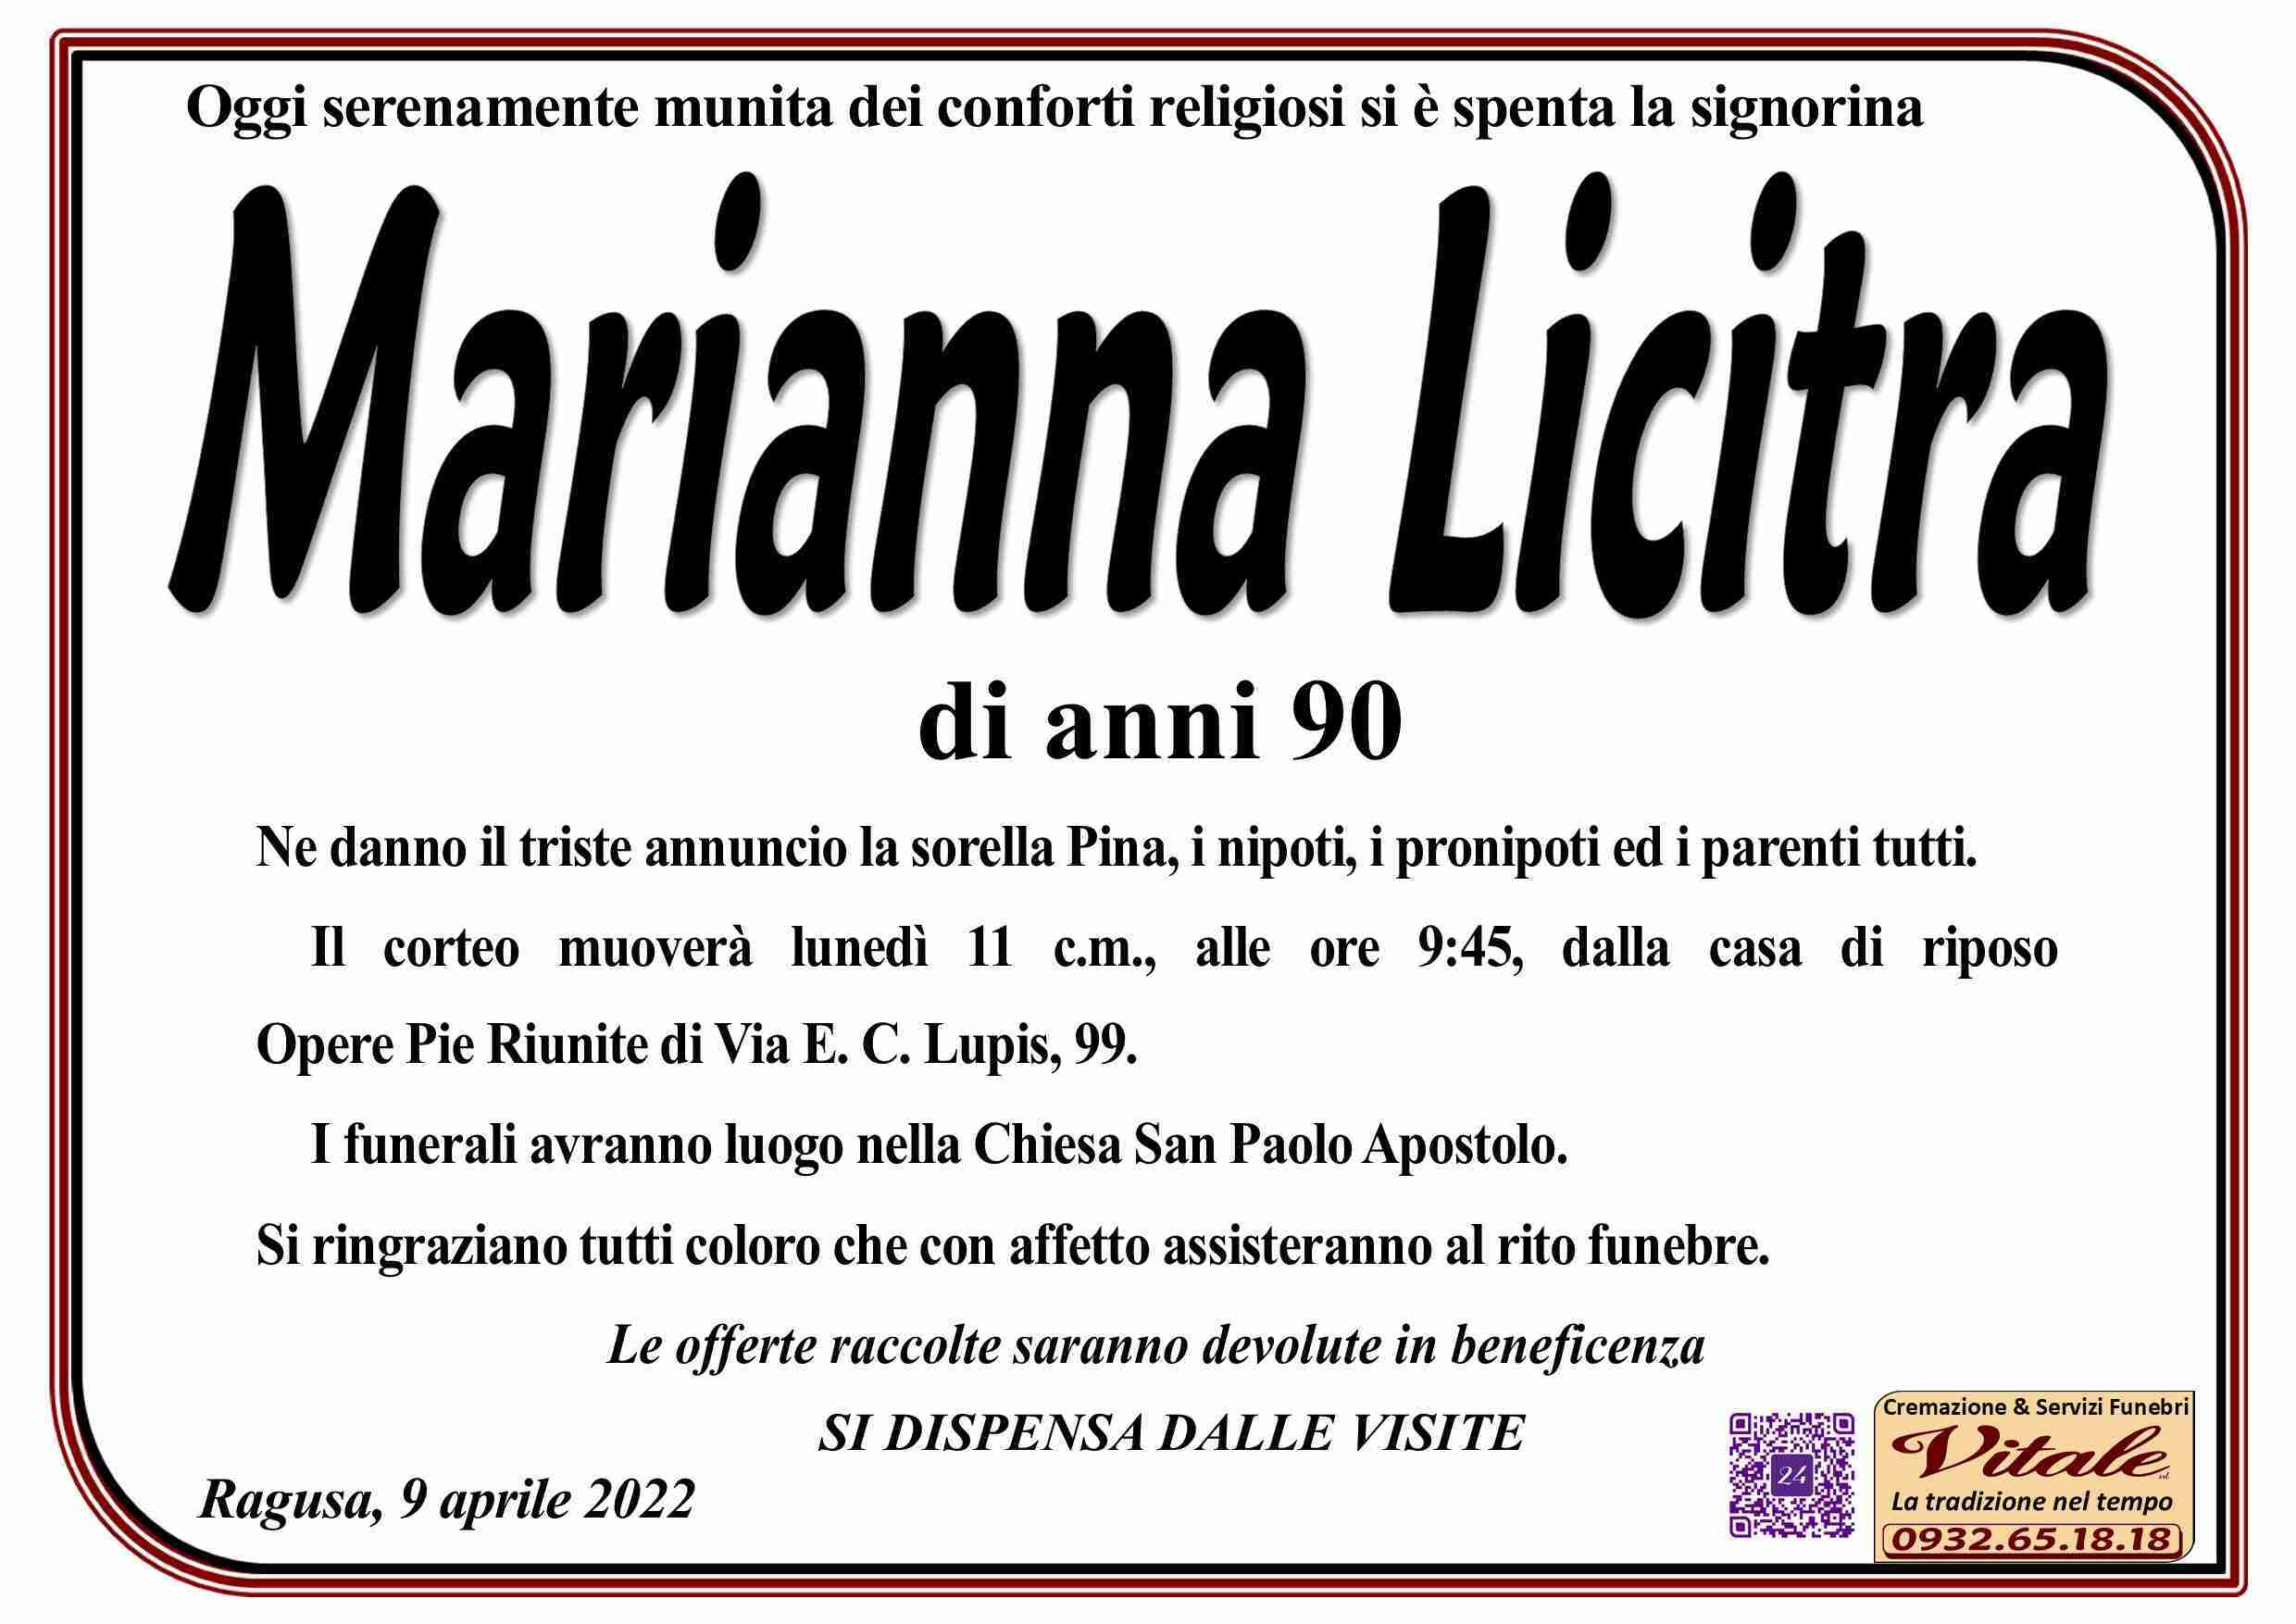 Marianna Licitra